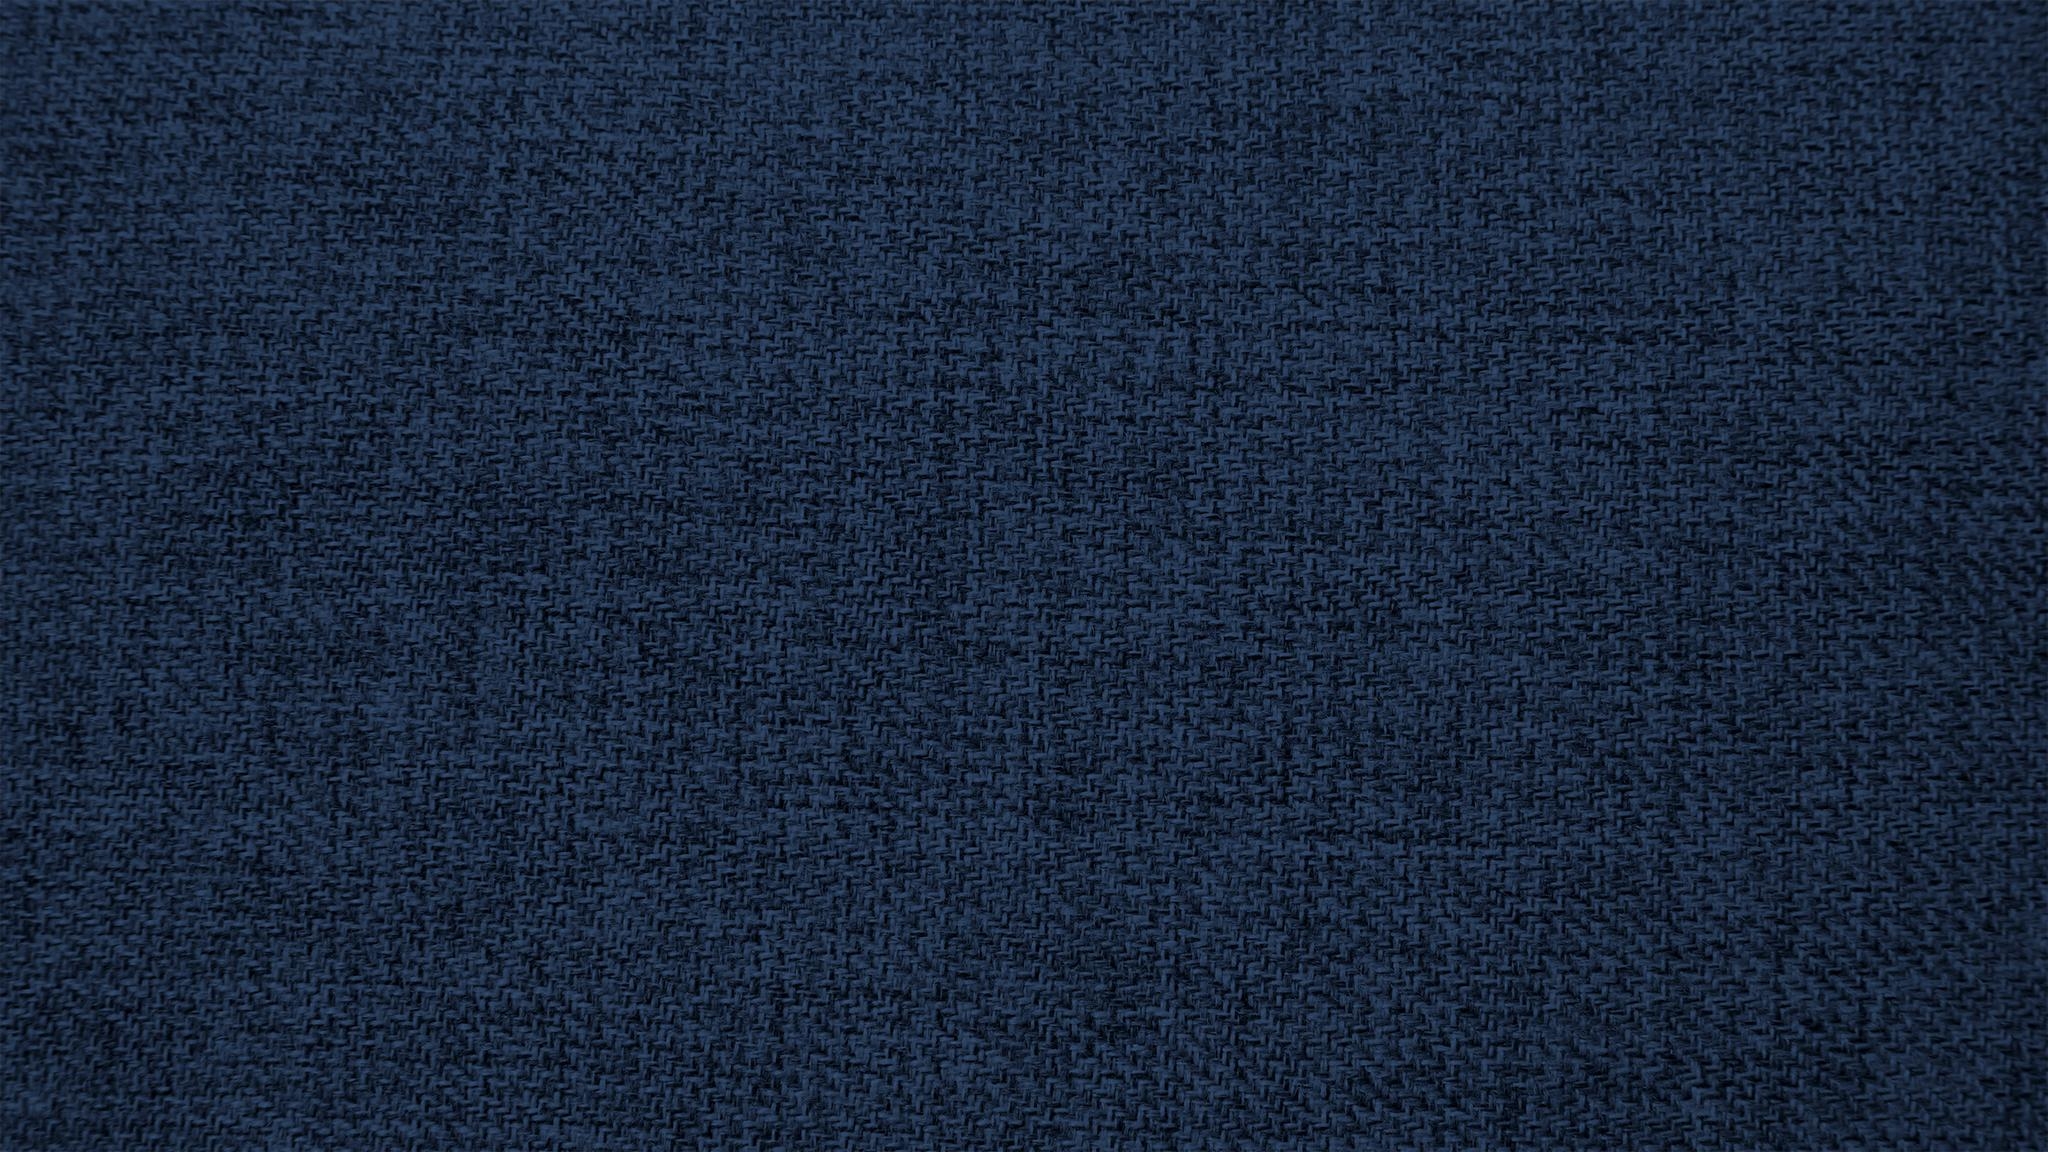 Blue Decorative Mid Century Modern Knife Edge Pillows 18 x 18 (Set of 2) - Key Largo Denim - Image 2